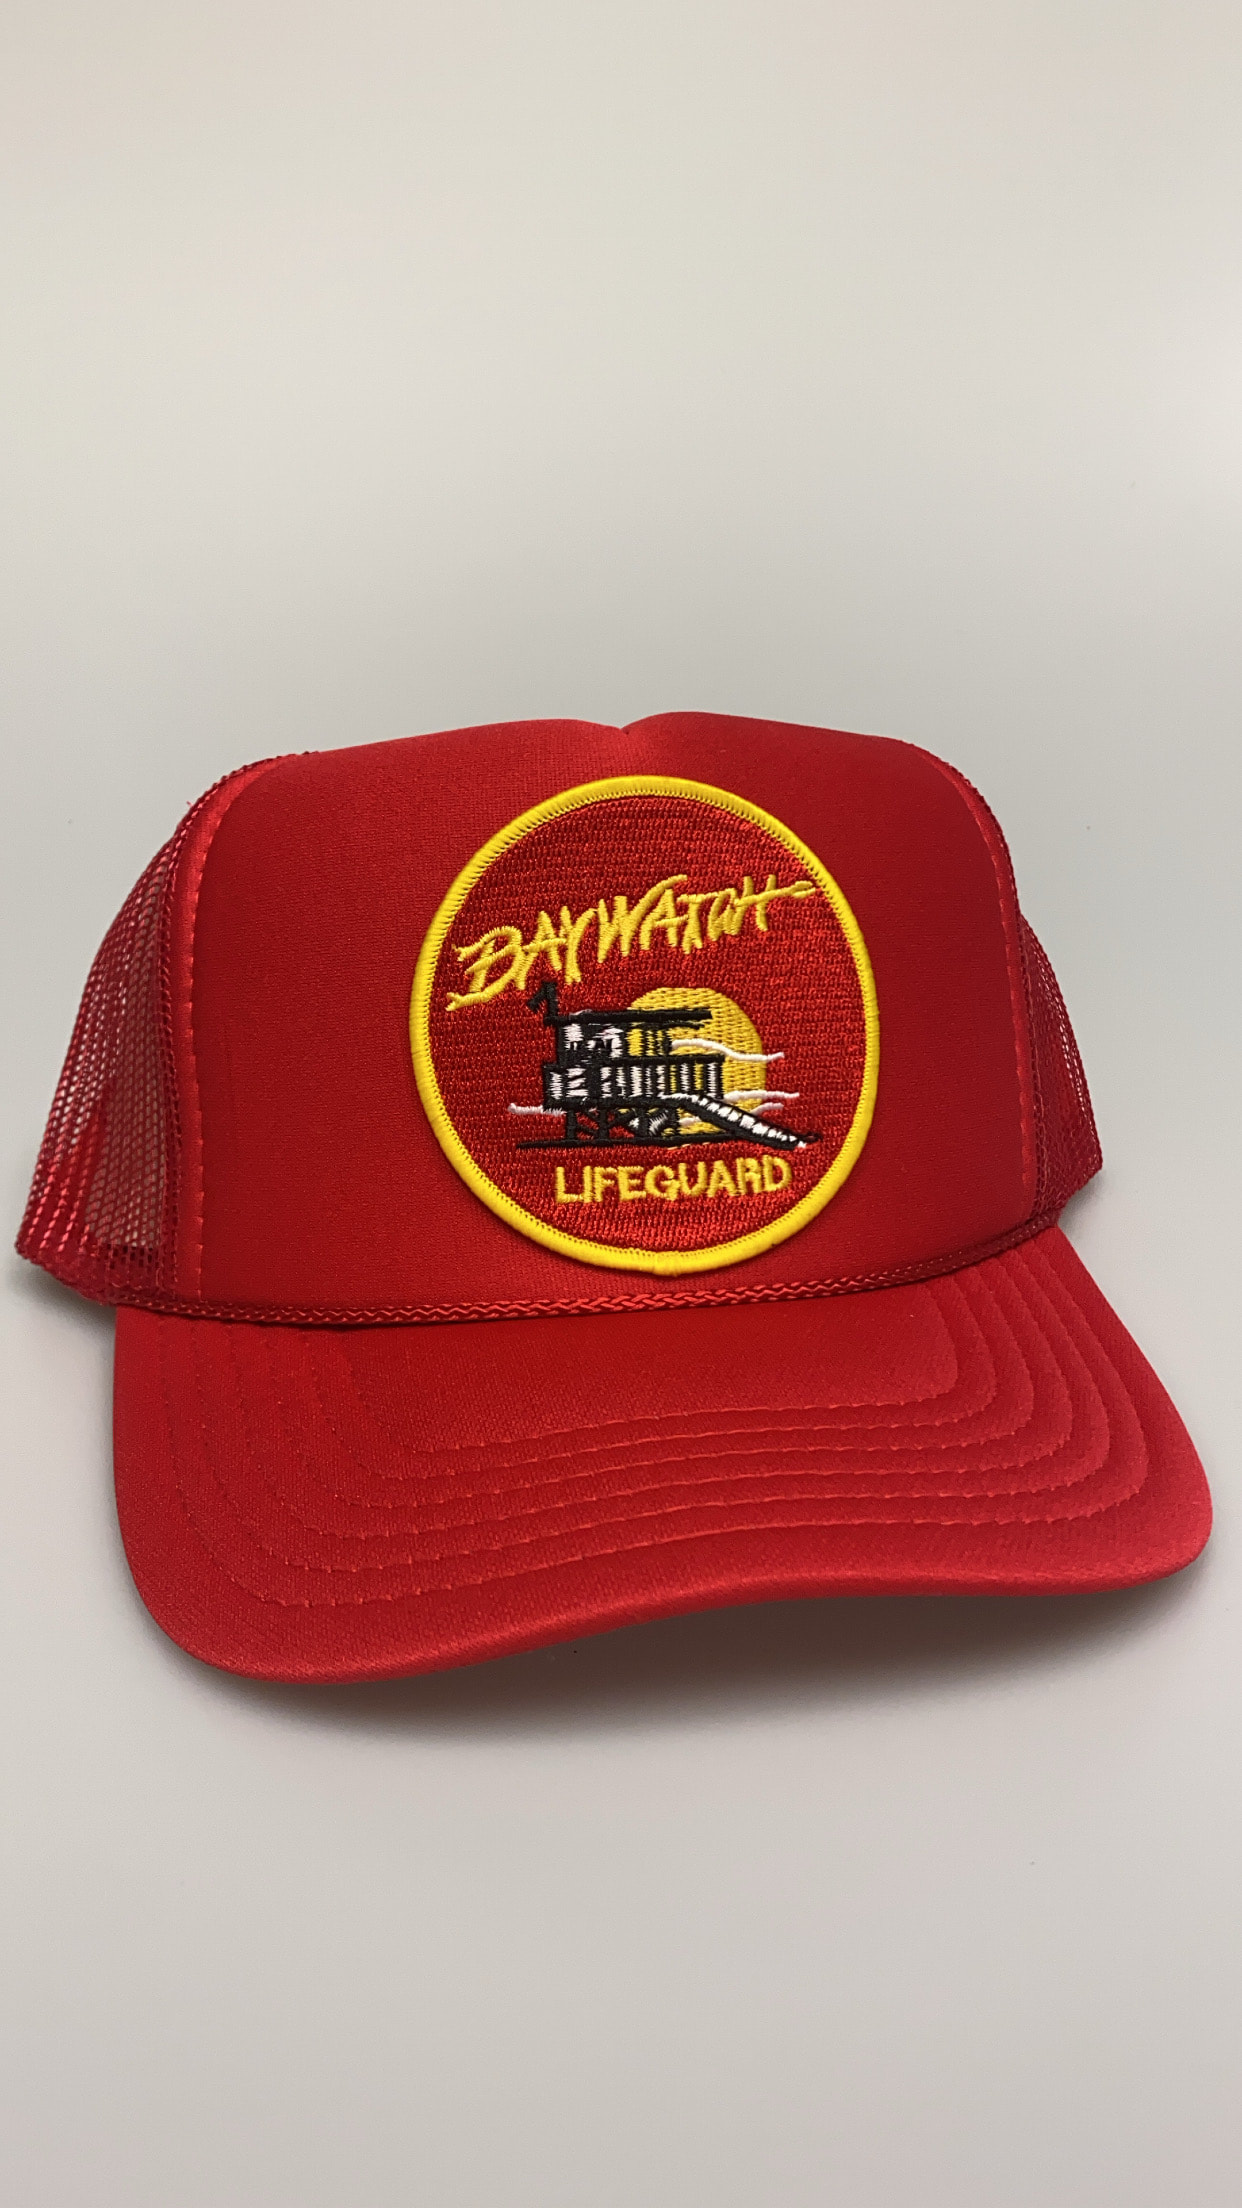 Baywatch | Custom Handmade Hats & Hoodies